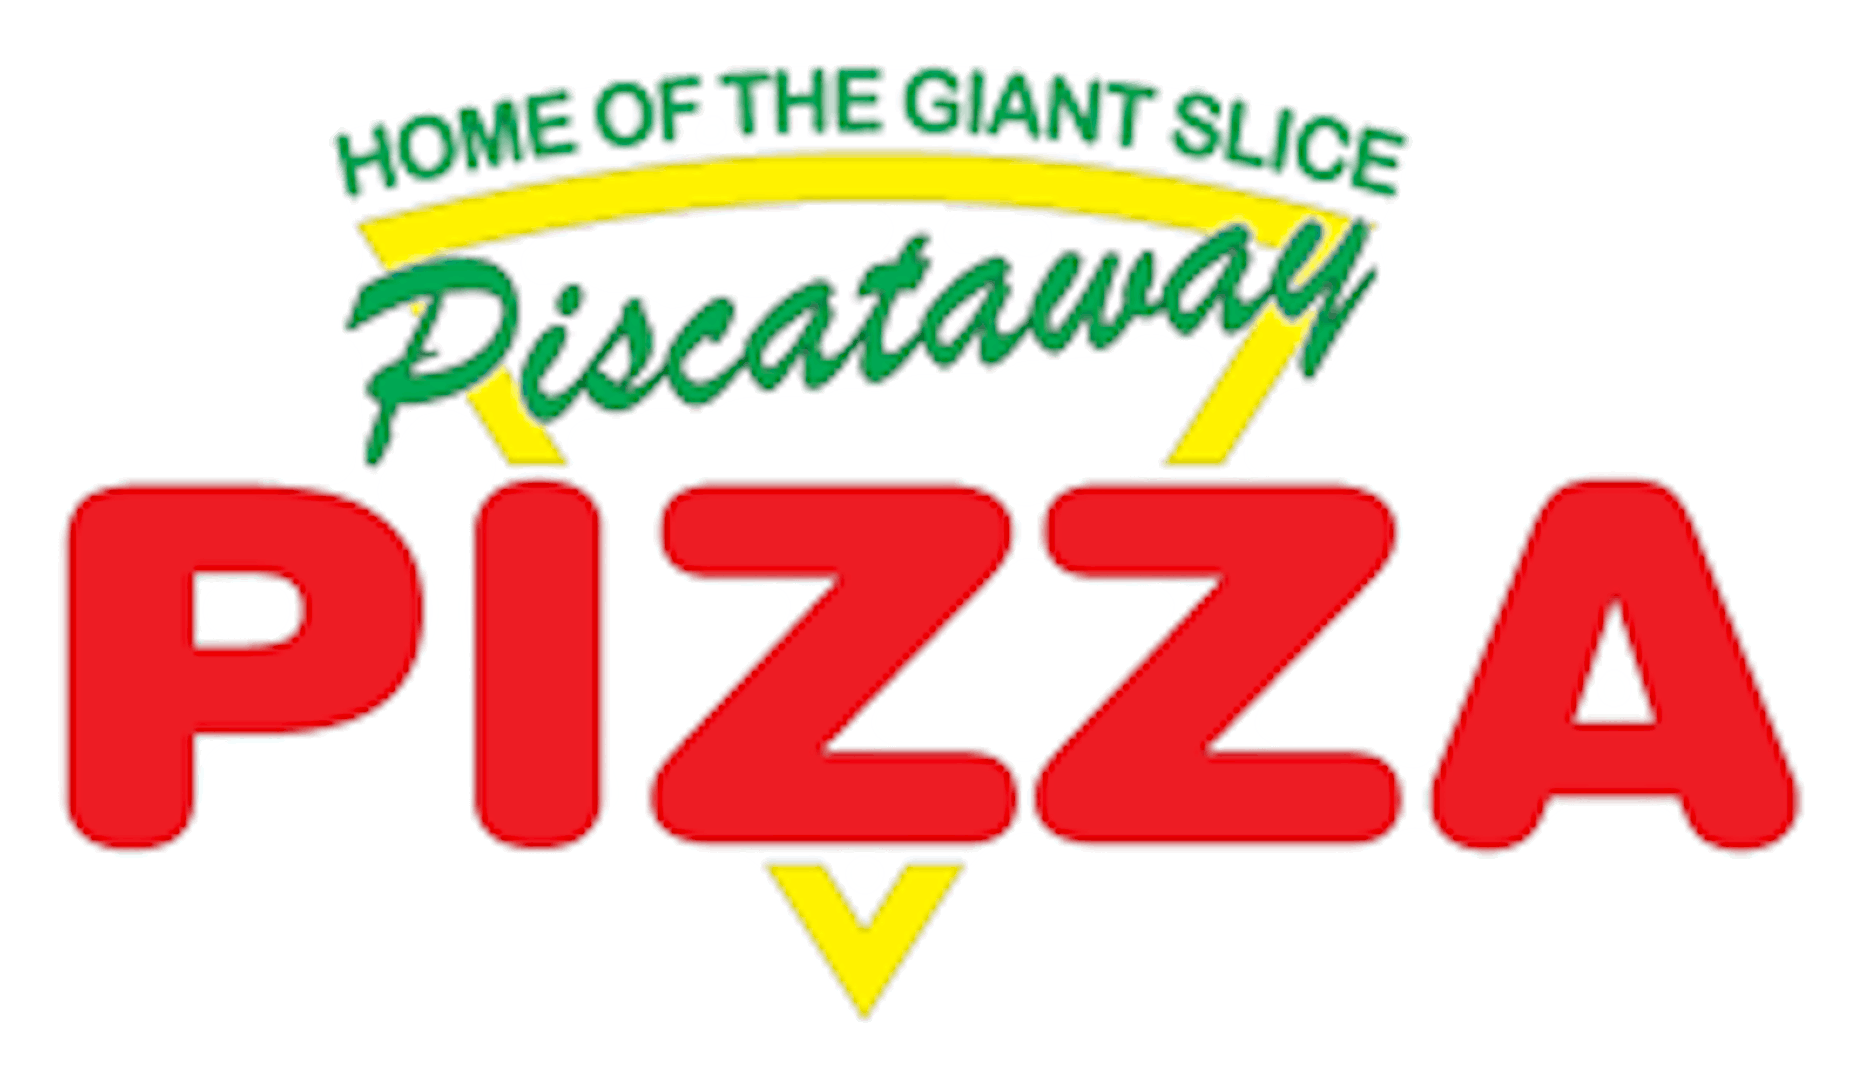 Piscataway Pizza